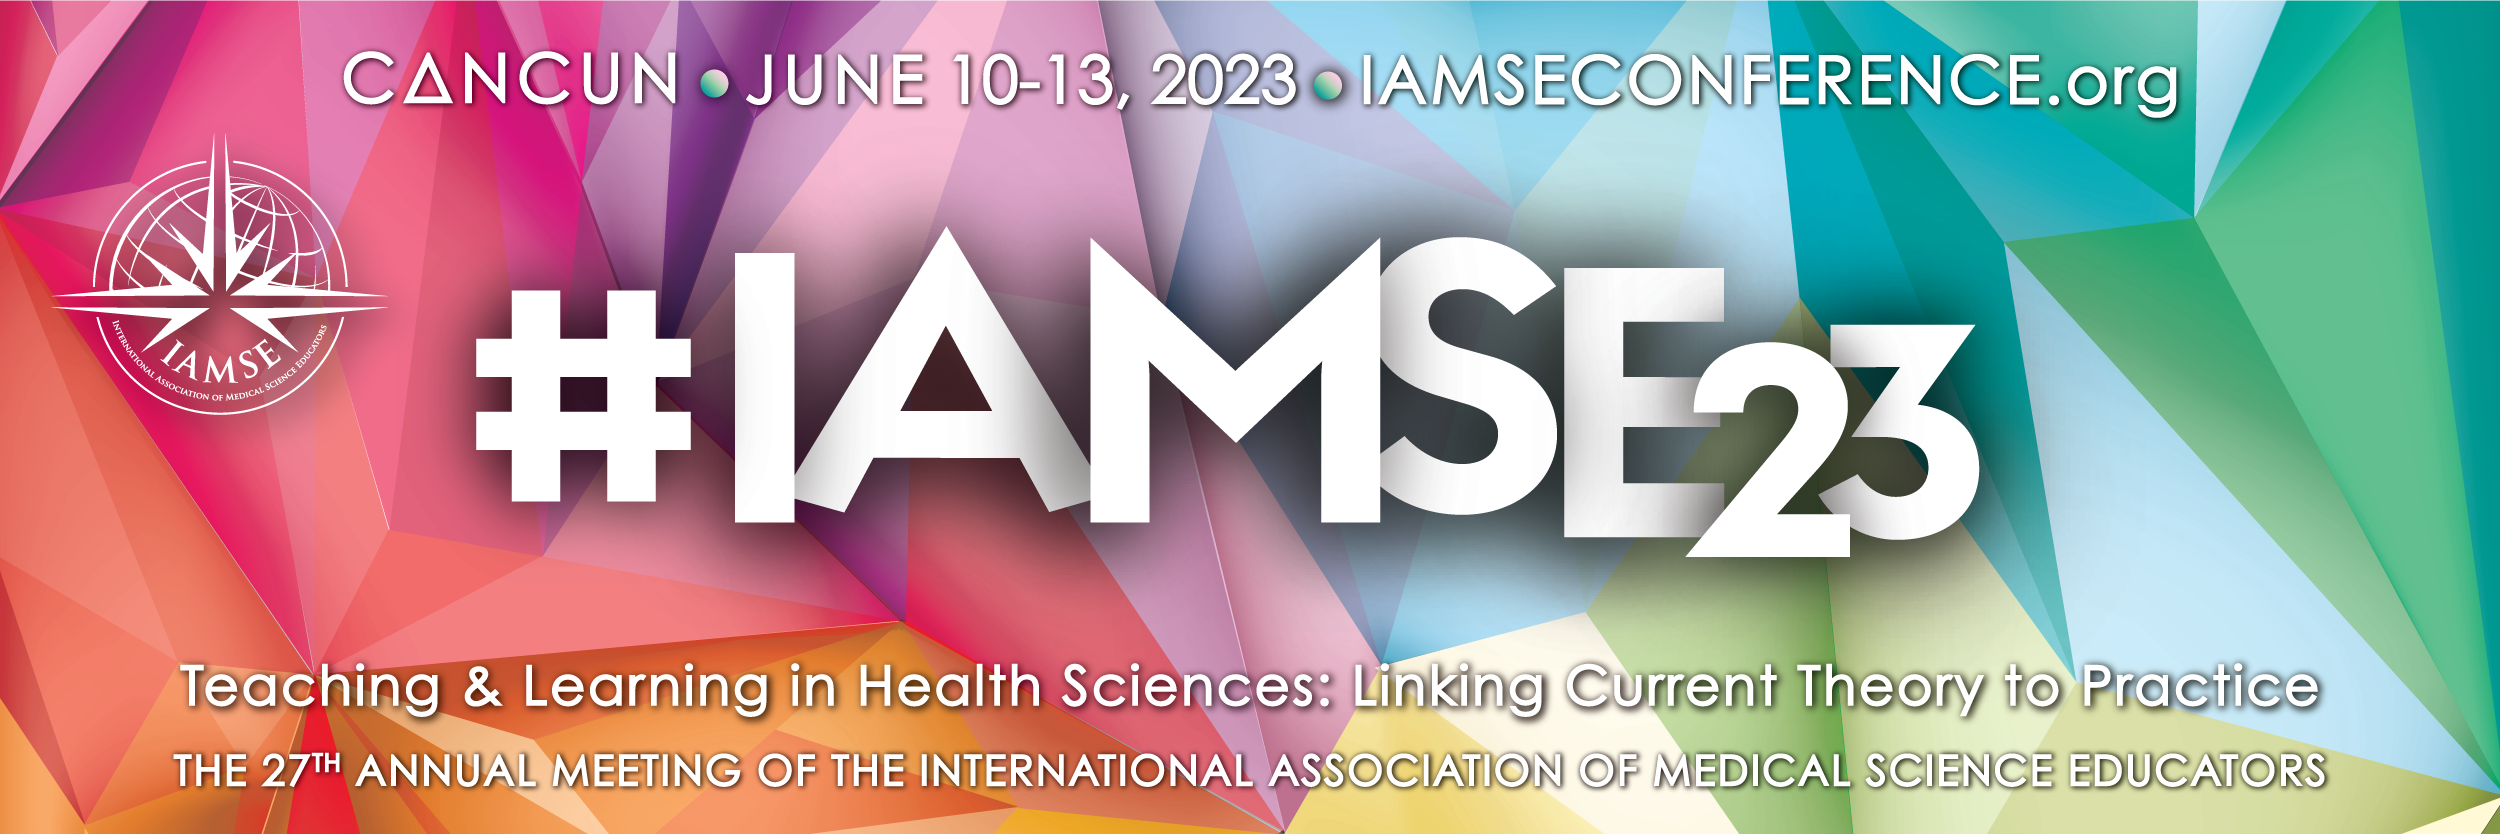 News - International Association of Medical Science Educators - IAMSE